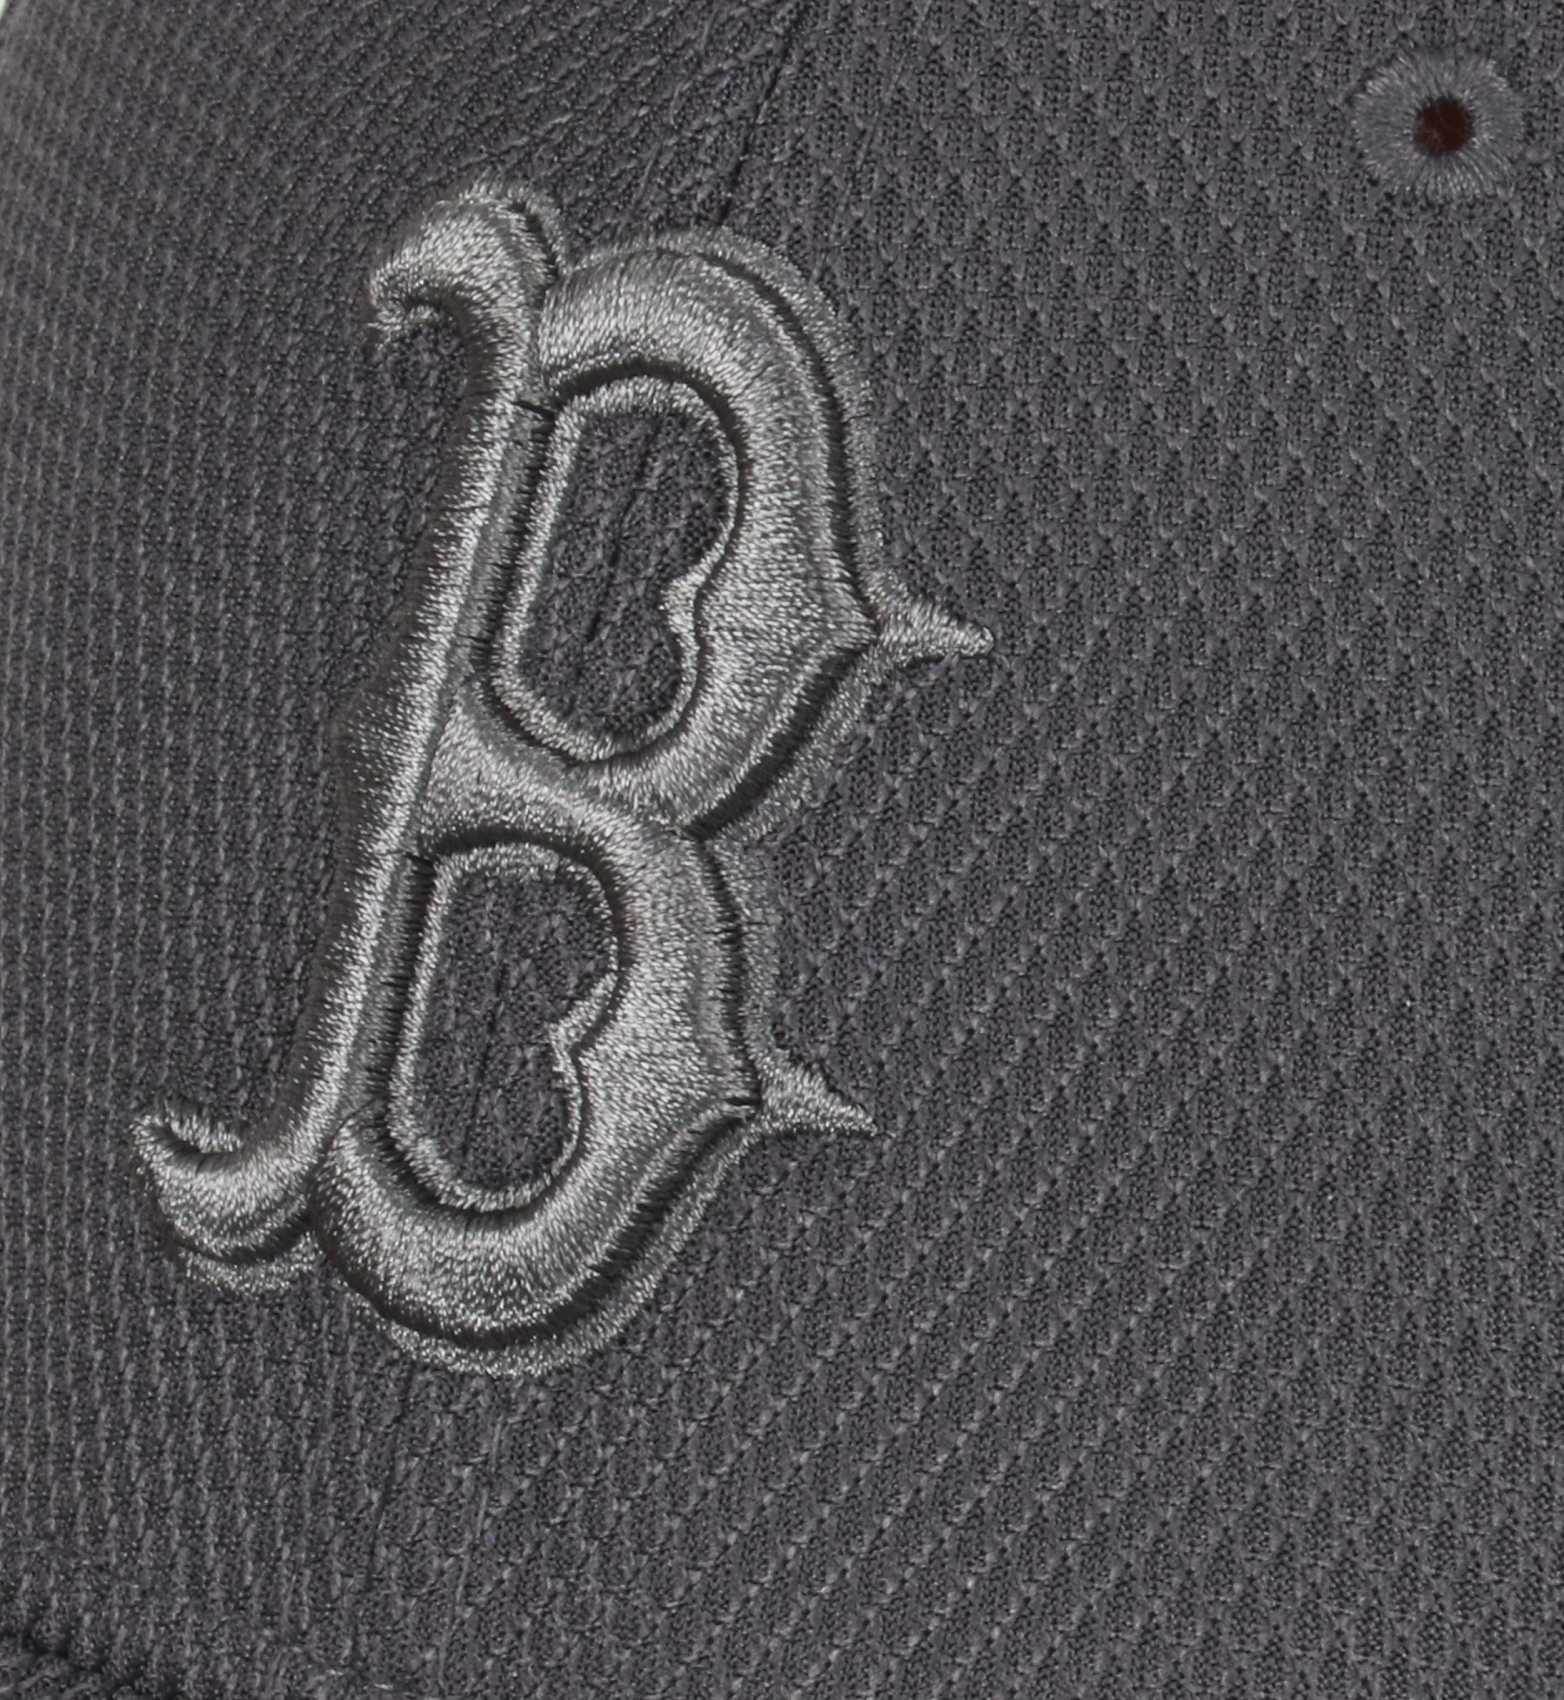 Boston Red Sox MLB Diamond Era 39Thirty Stretch Cap New Era